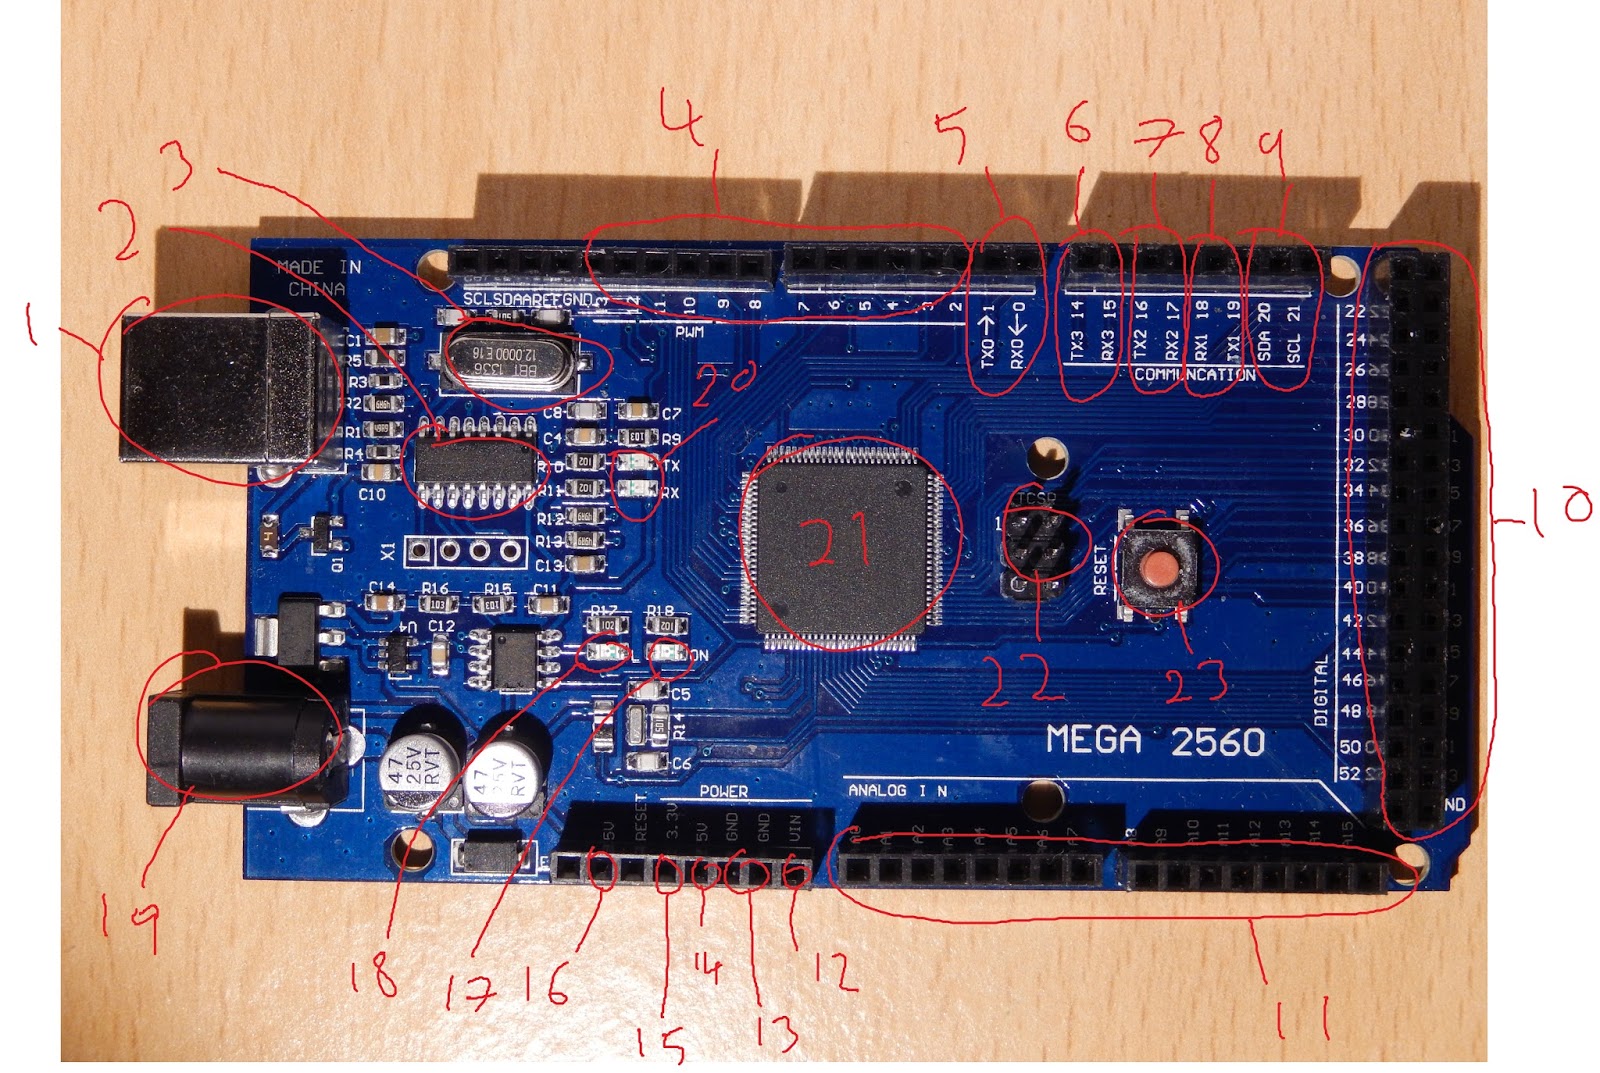 The Arduino Segment: The Arduino Mega 2560